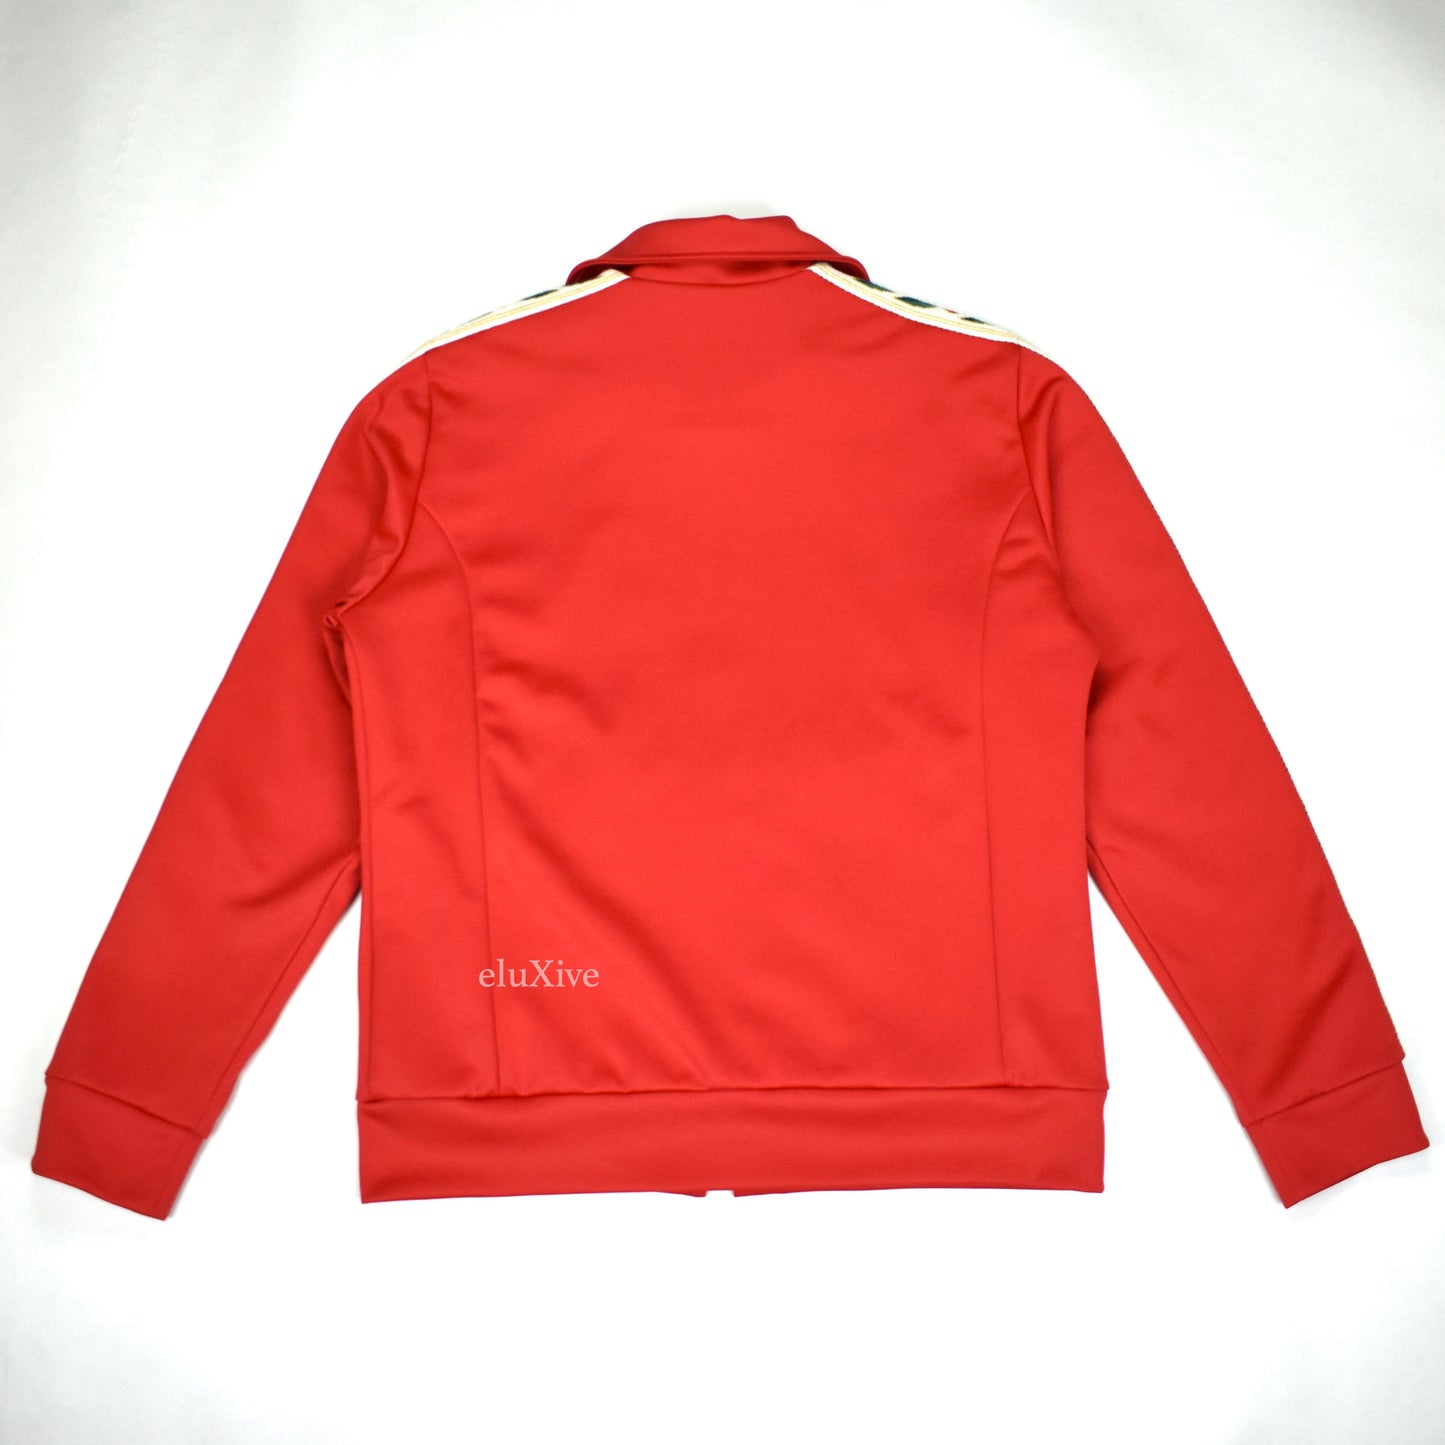 Casablanca - Red Laurel Stripe Track Jacket